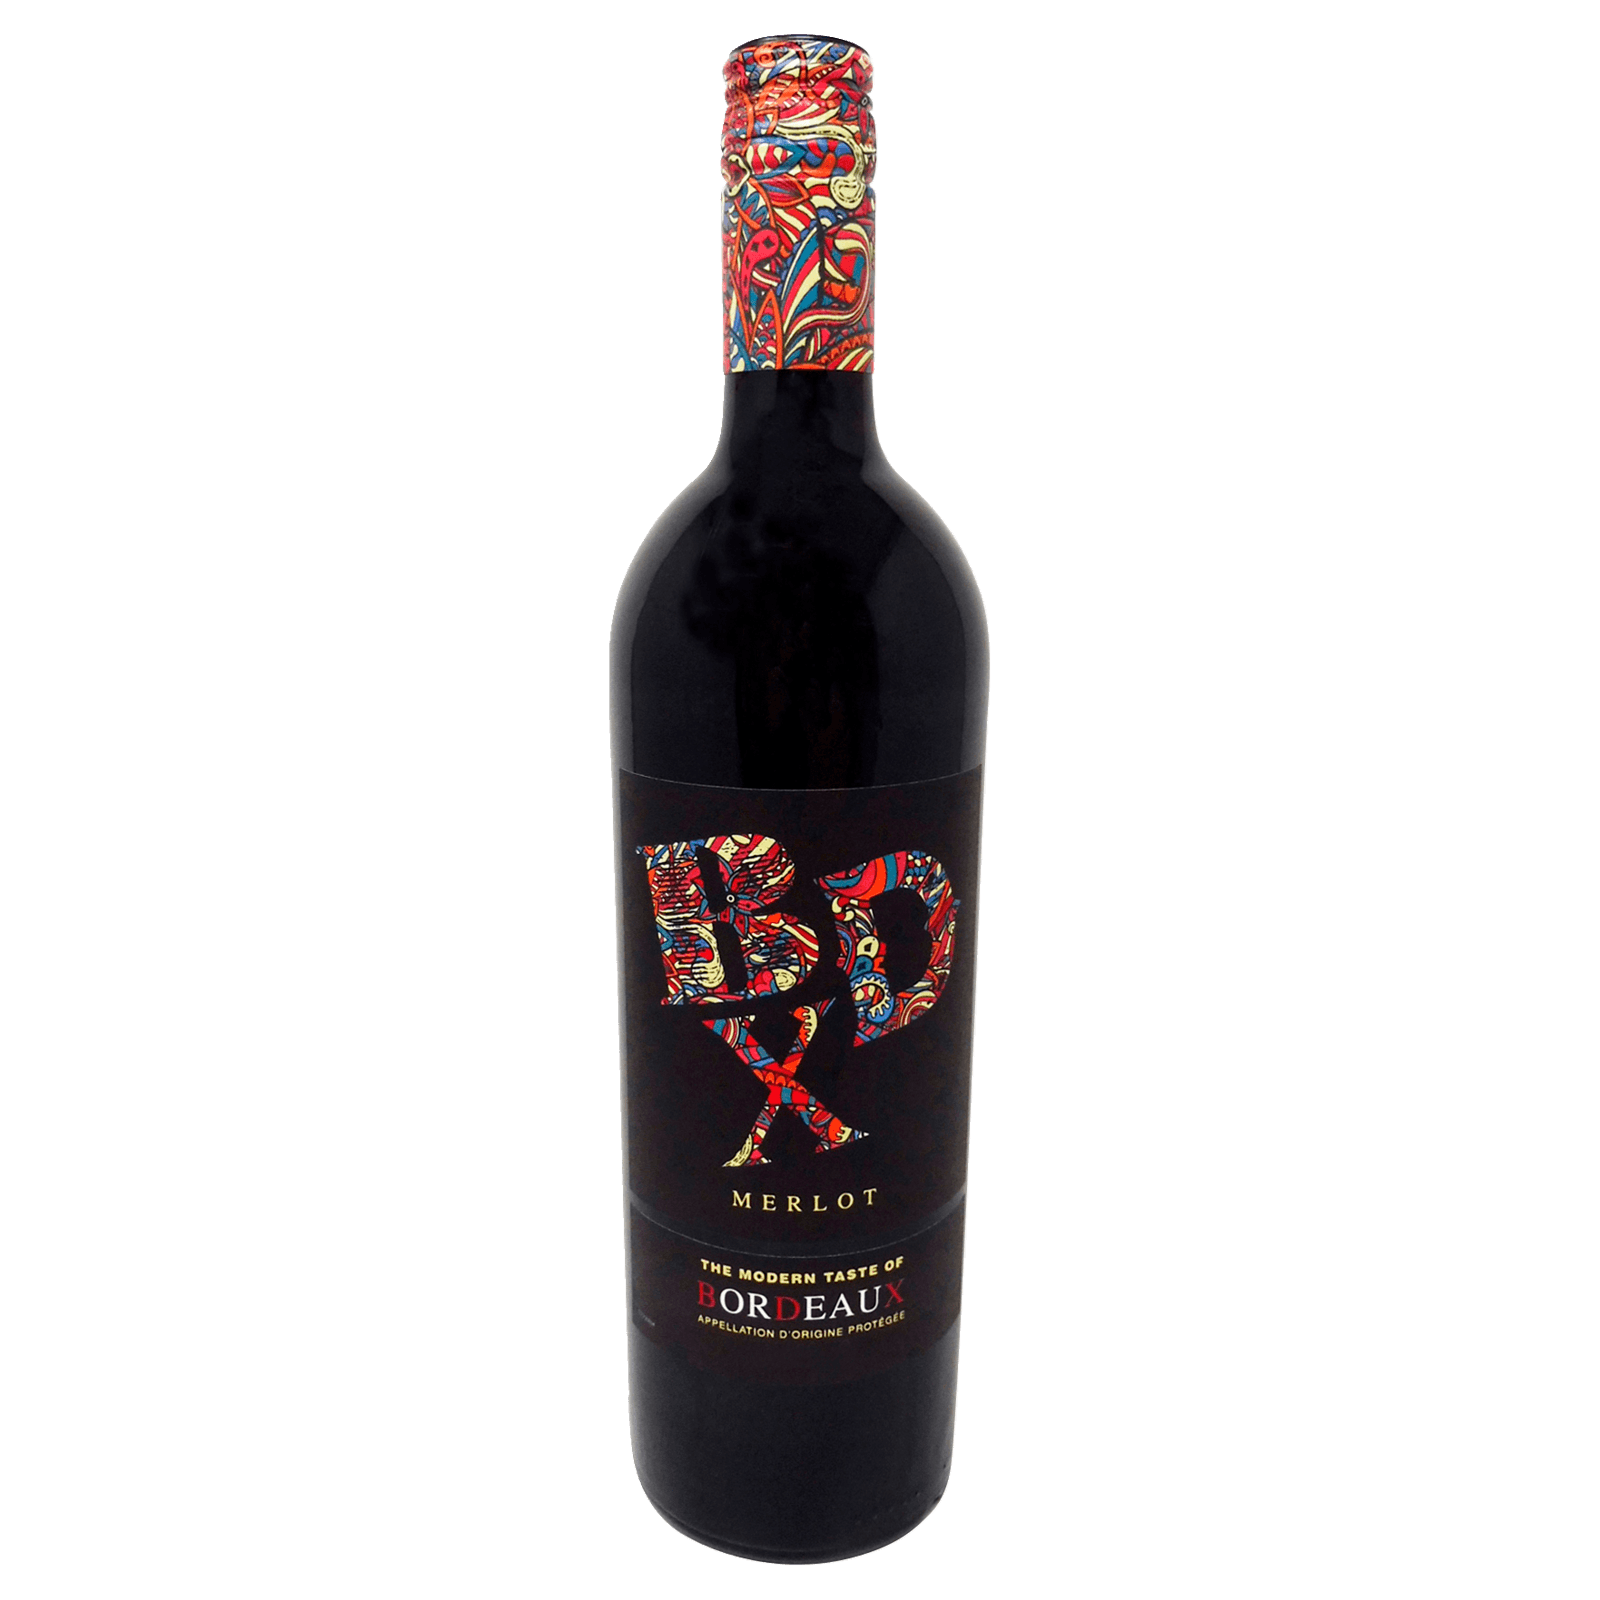 Bordeaux rotwein Merlot AOP 0,75l bei REWE online bestellen!